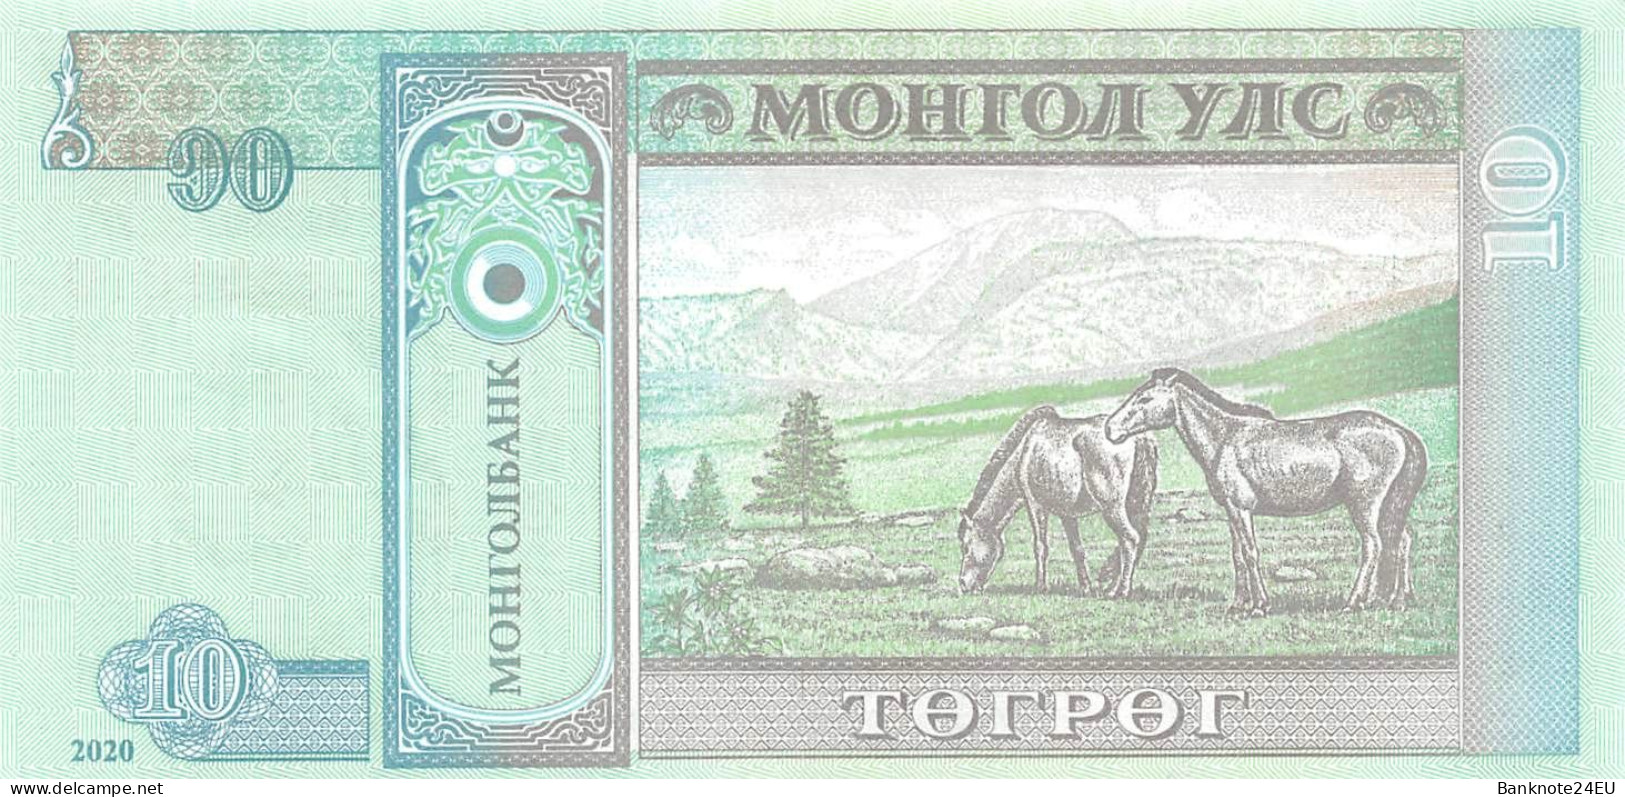 Mongolia 10 Togrog 2020 Unc Pn 62k - Mongolia